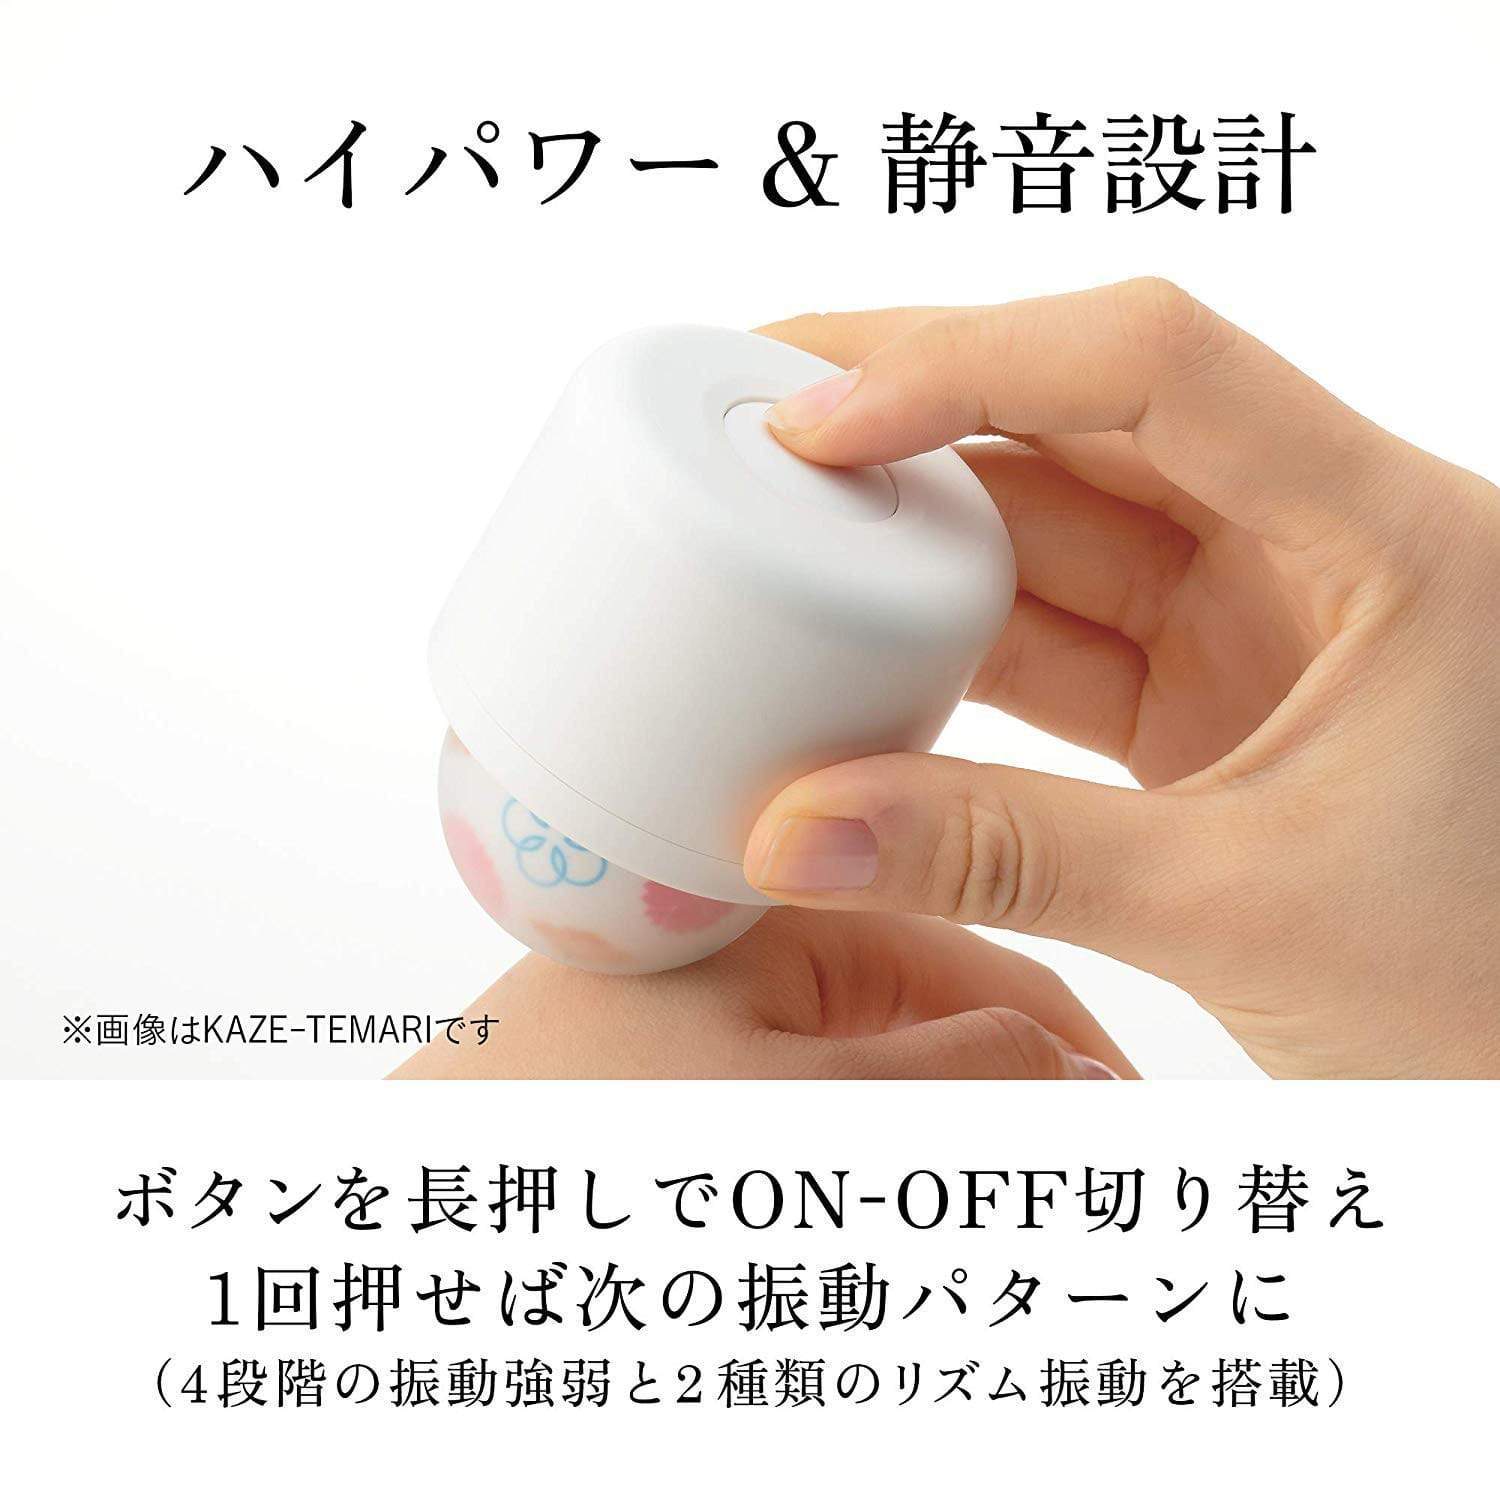 Tenga - Iroha Kaze-Temari Clit Massager (White) -  Clit Massager (Vibration) Rechargeable  Durio.sg